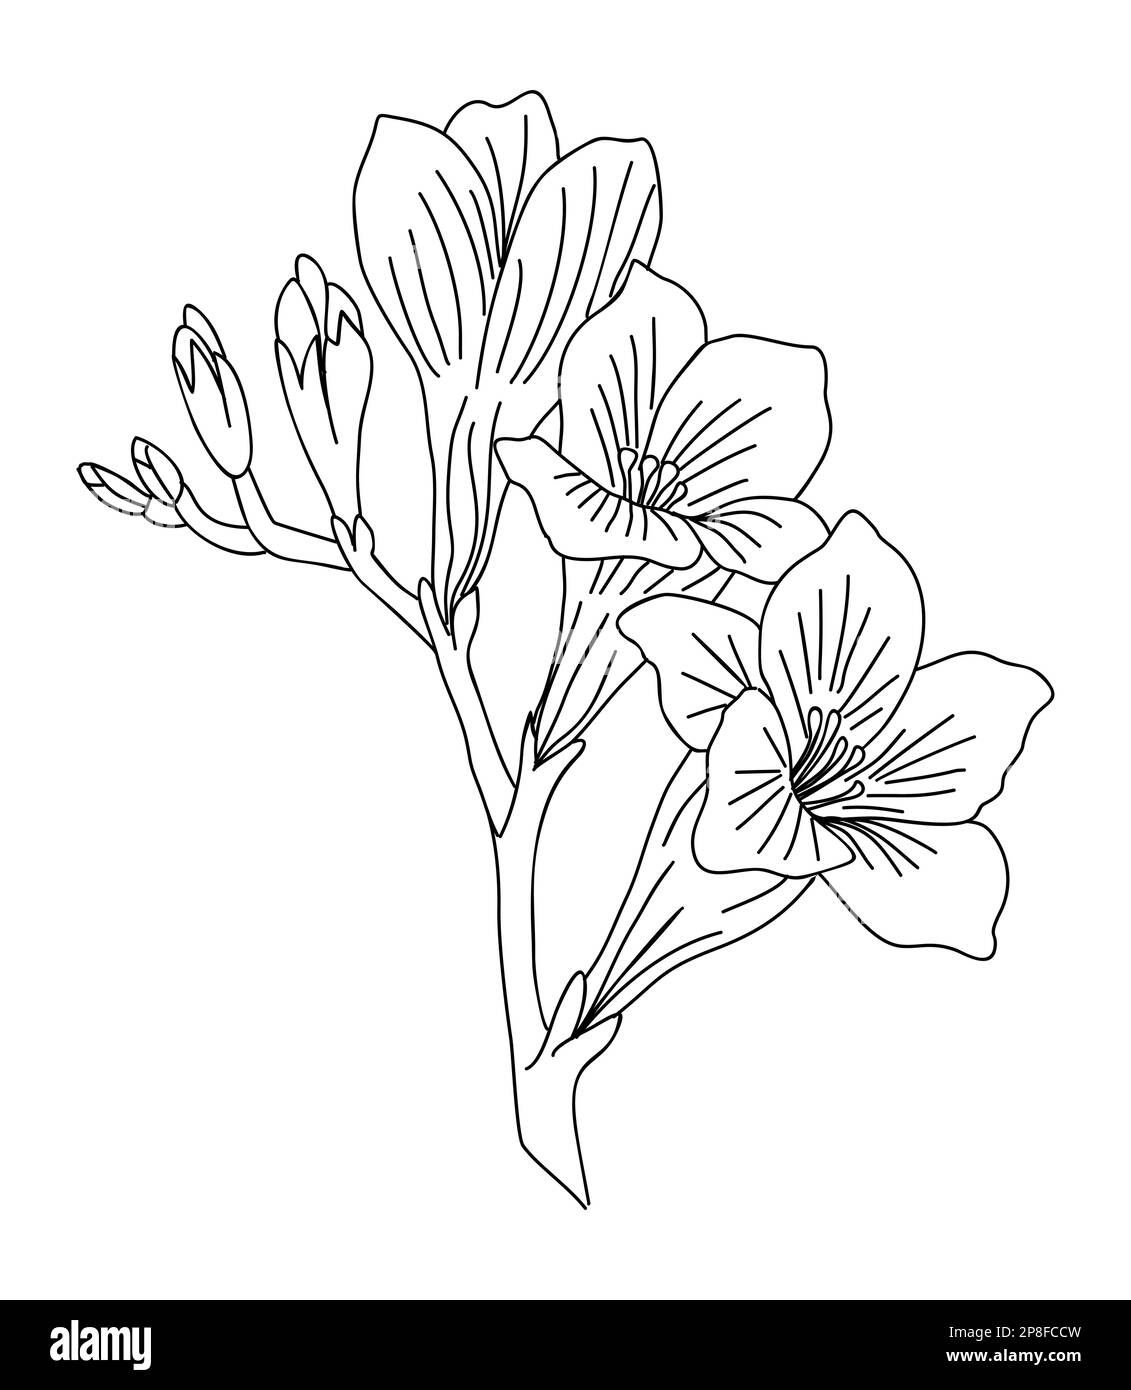 Gladiolus flowers | Flower leg tattoos, Flower tattoo, Floral thigh tattoos